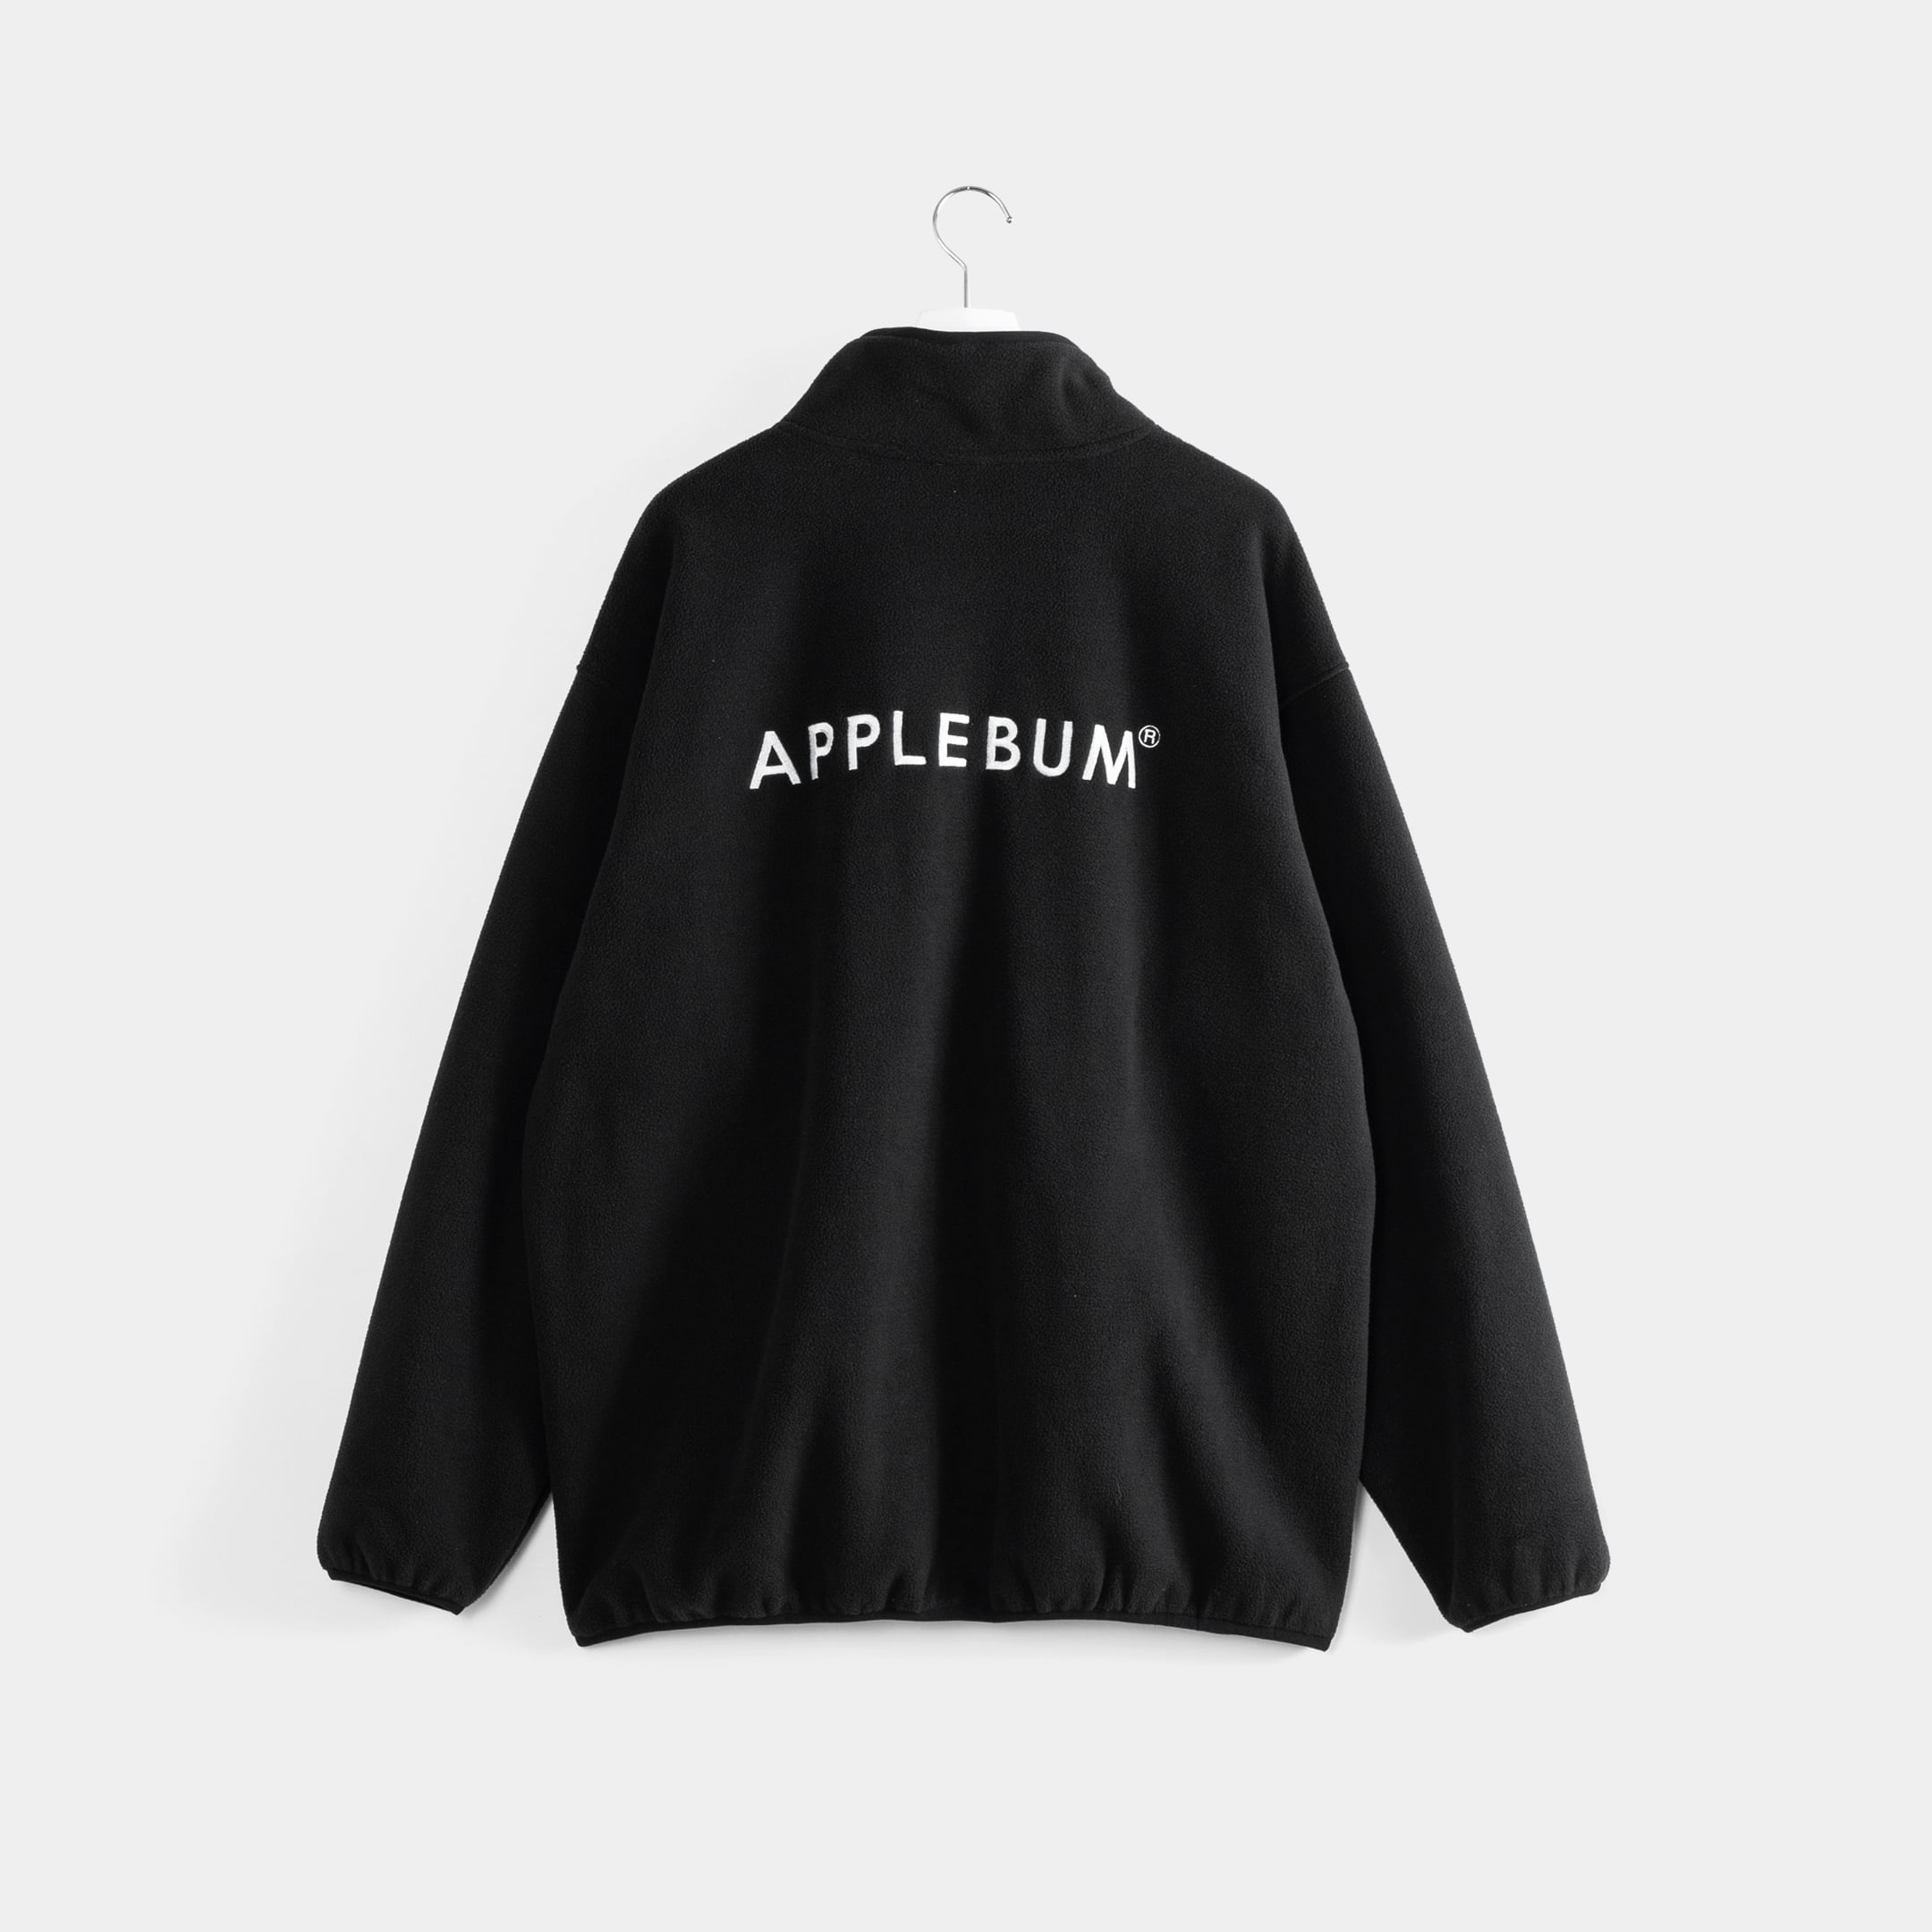 【APPLEBUM】アップルバム Fleece Jacket (BLACK) フリースジャケット